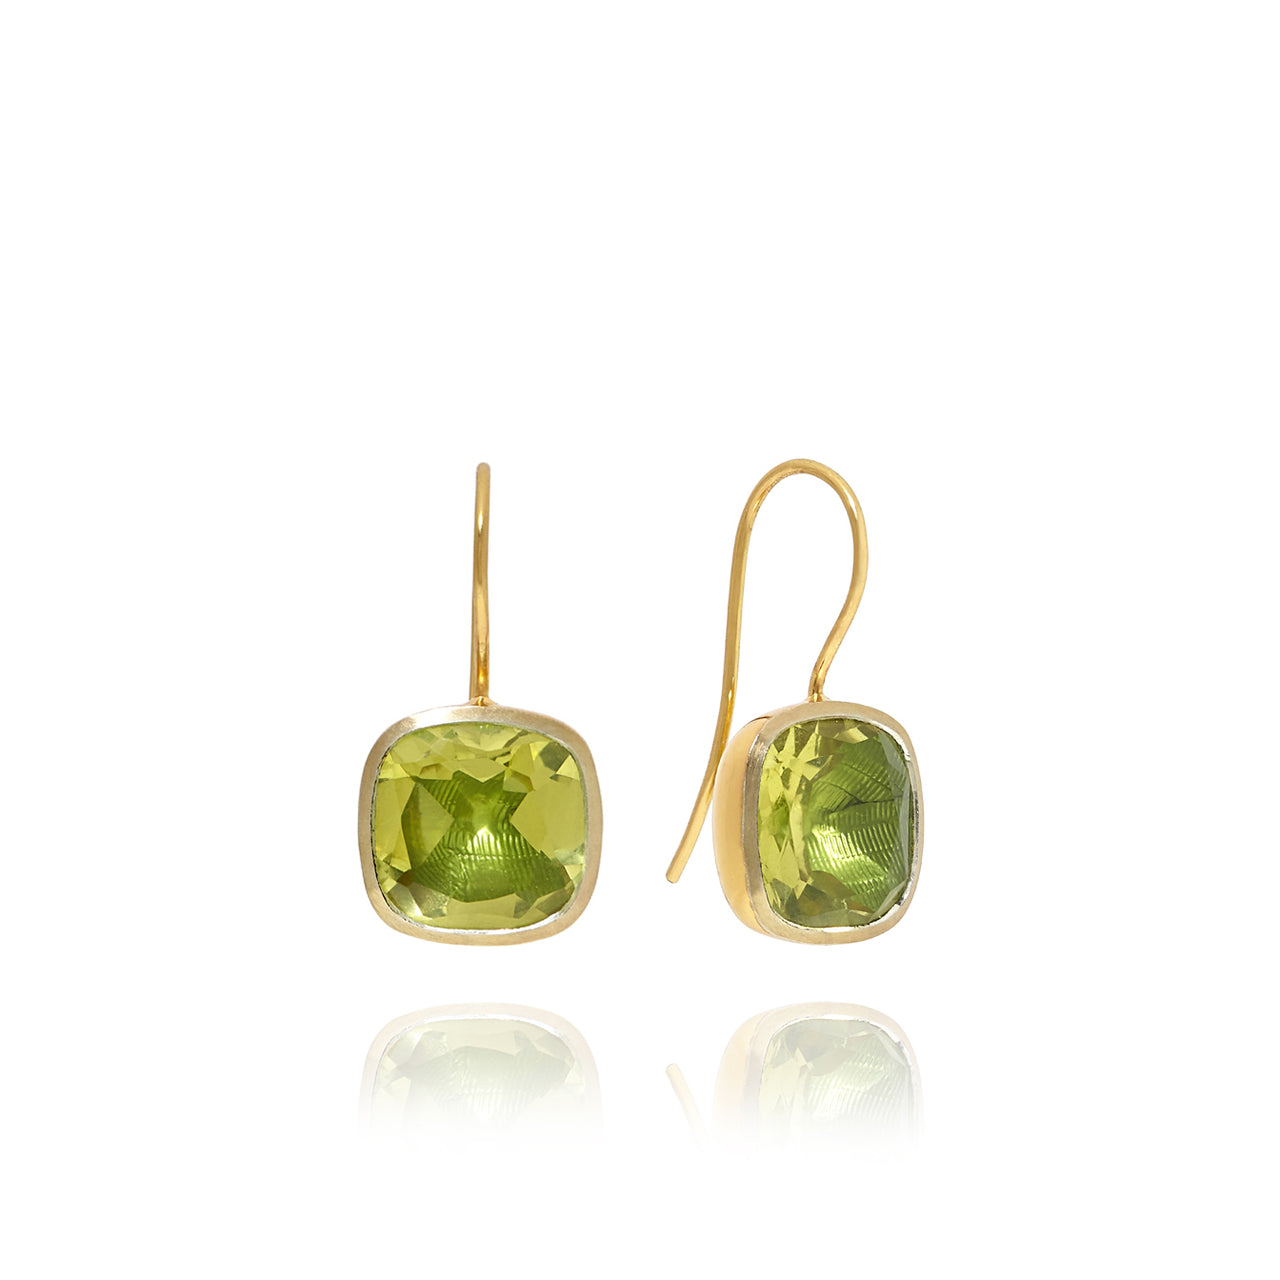 Luzia Button Earrings in Lemon Quartz & 14k Gold